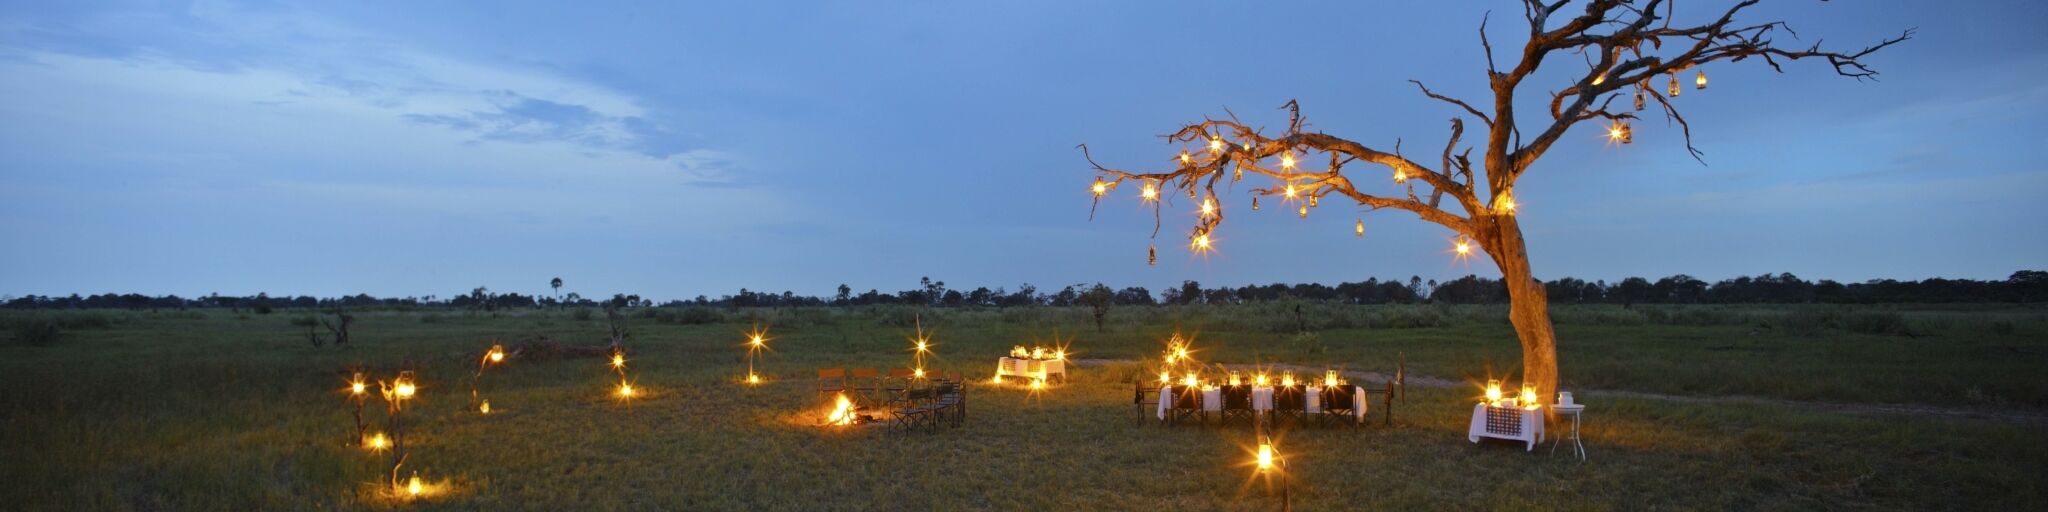 Decor lights at Camp Okavango, Botswana